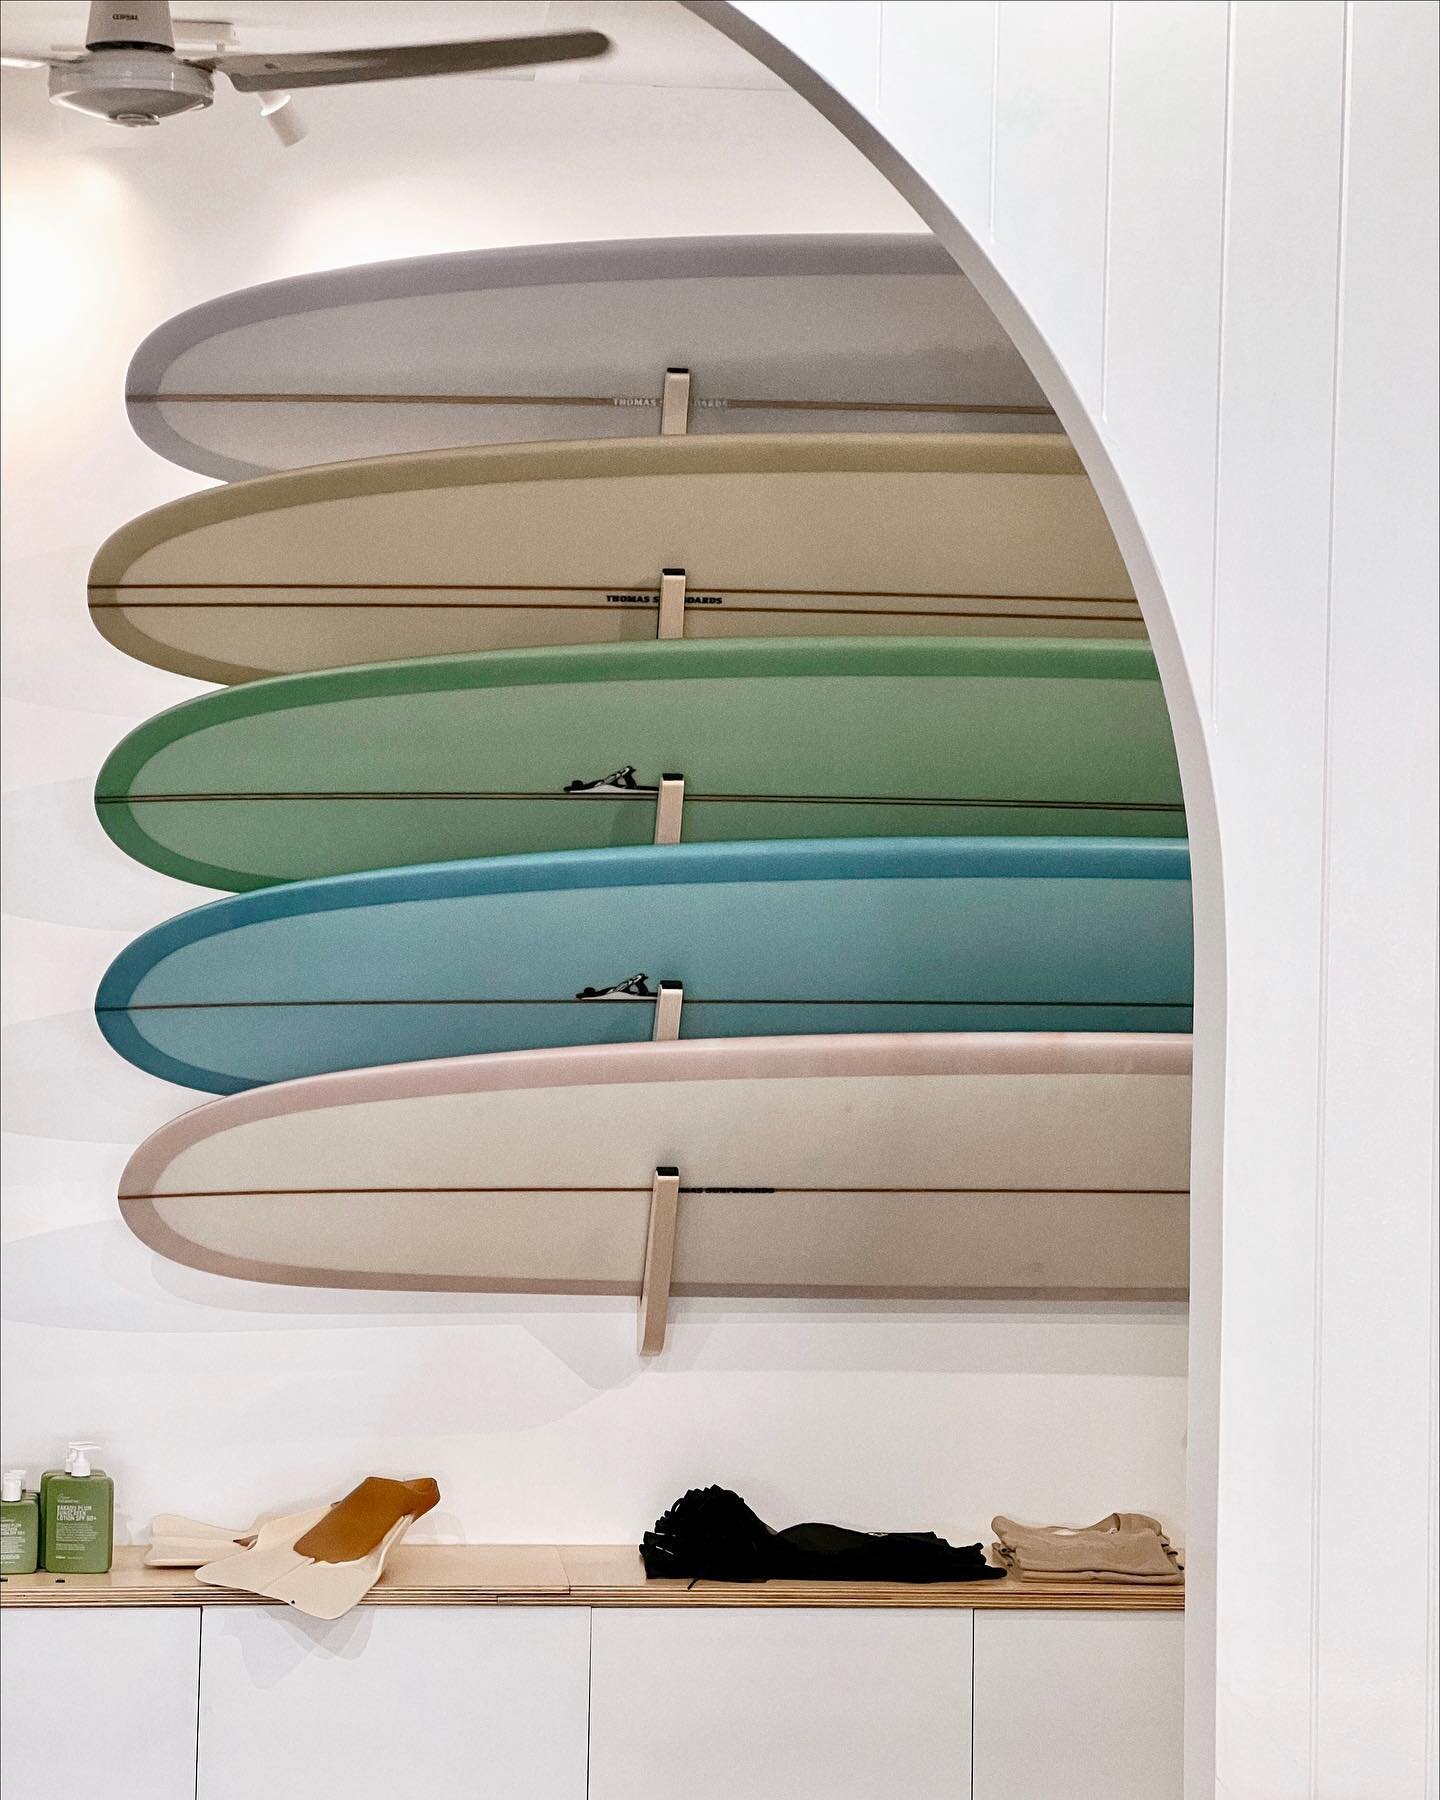 surf shop that doubles as a coffee shop, okokokok 🌞